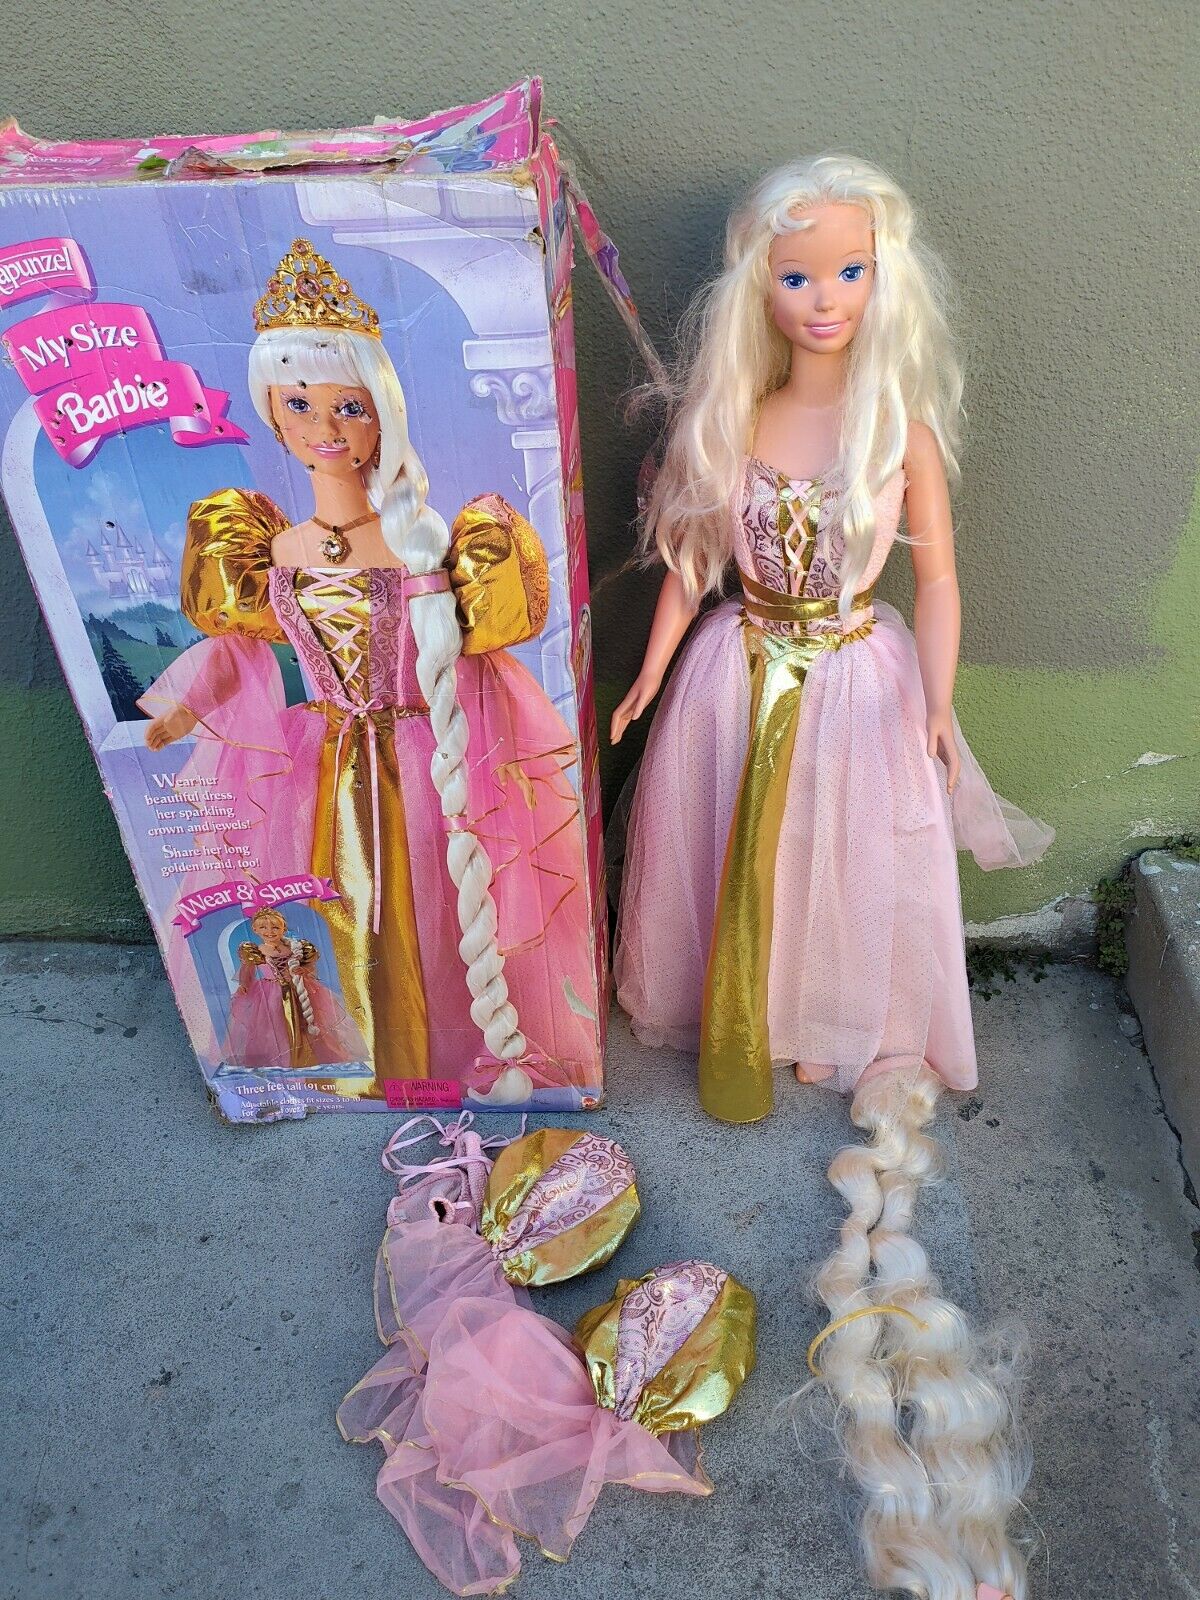 Vintage 1997 Mattel My Size Barbie "rapunzel" In Original Box